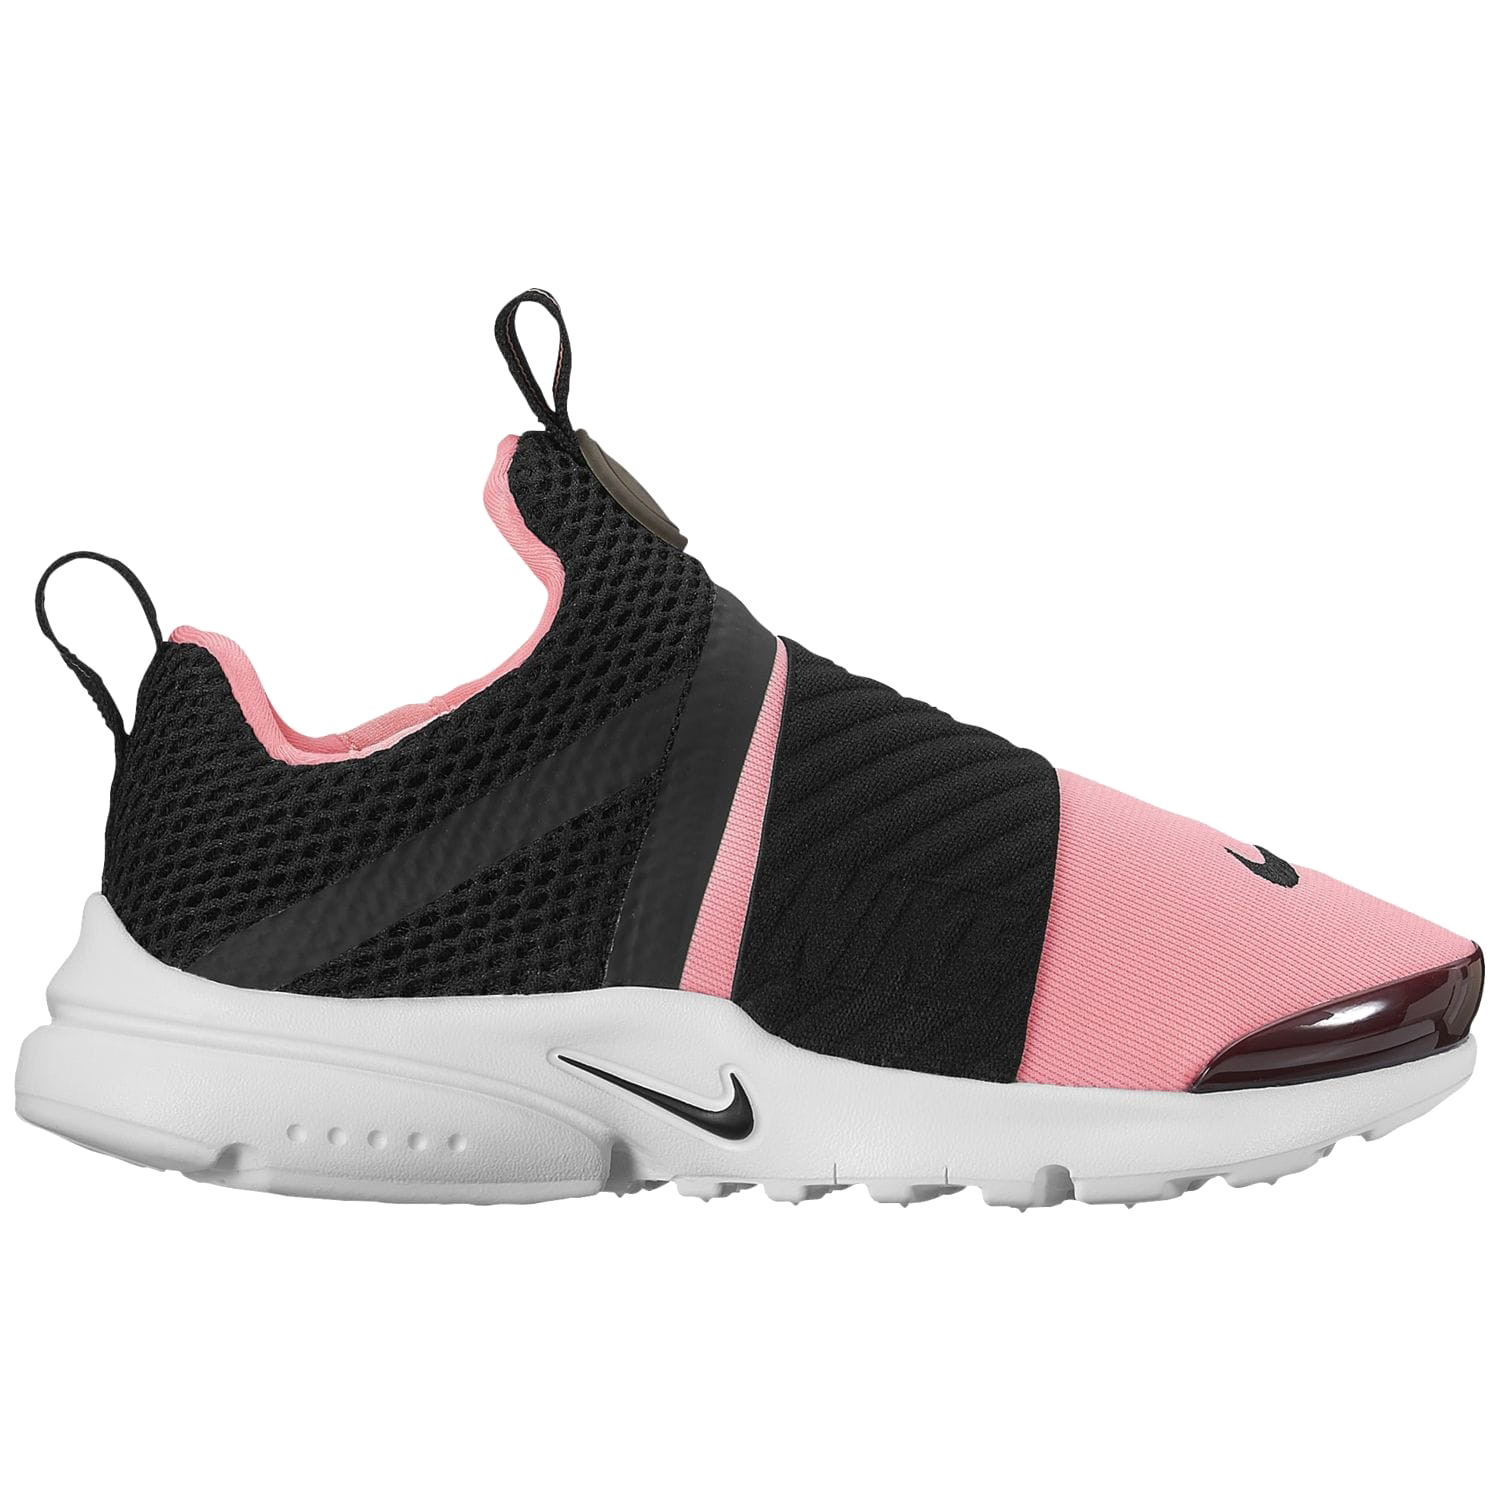 Nike Running Shoes PNG Transparent Image